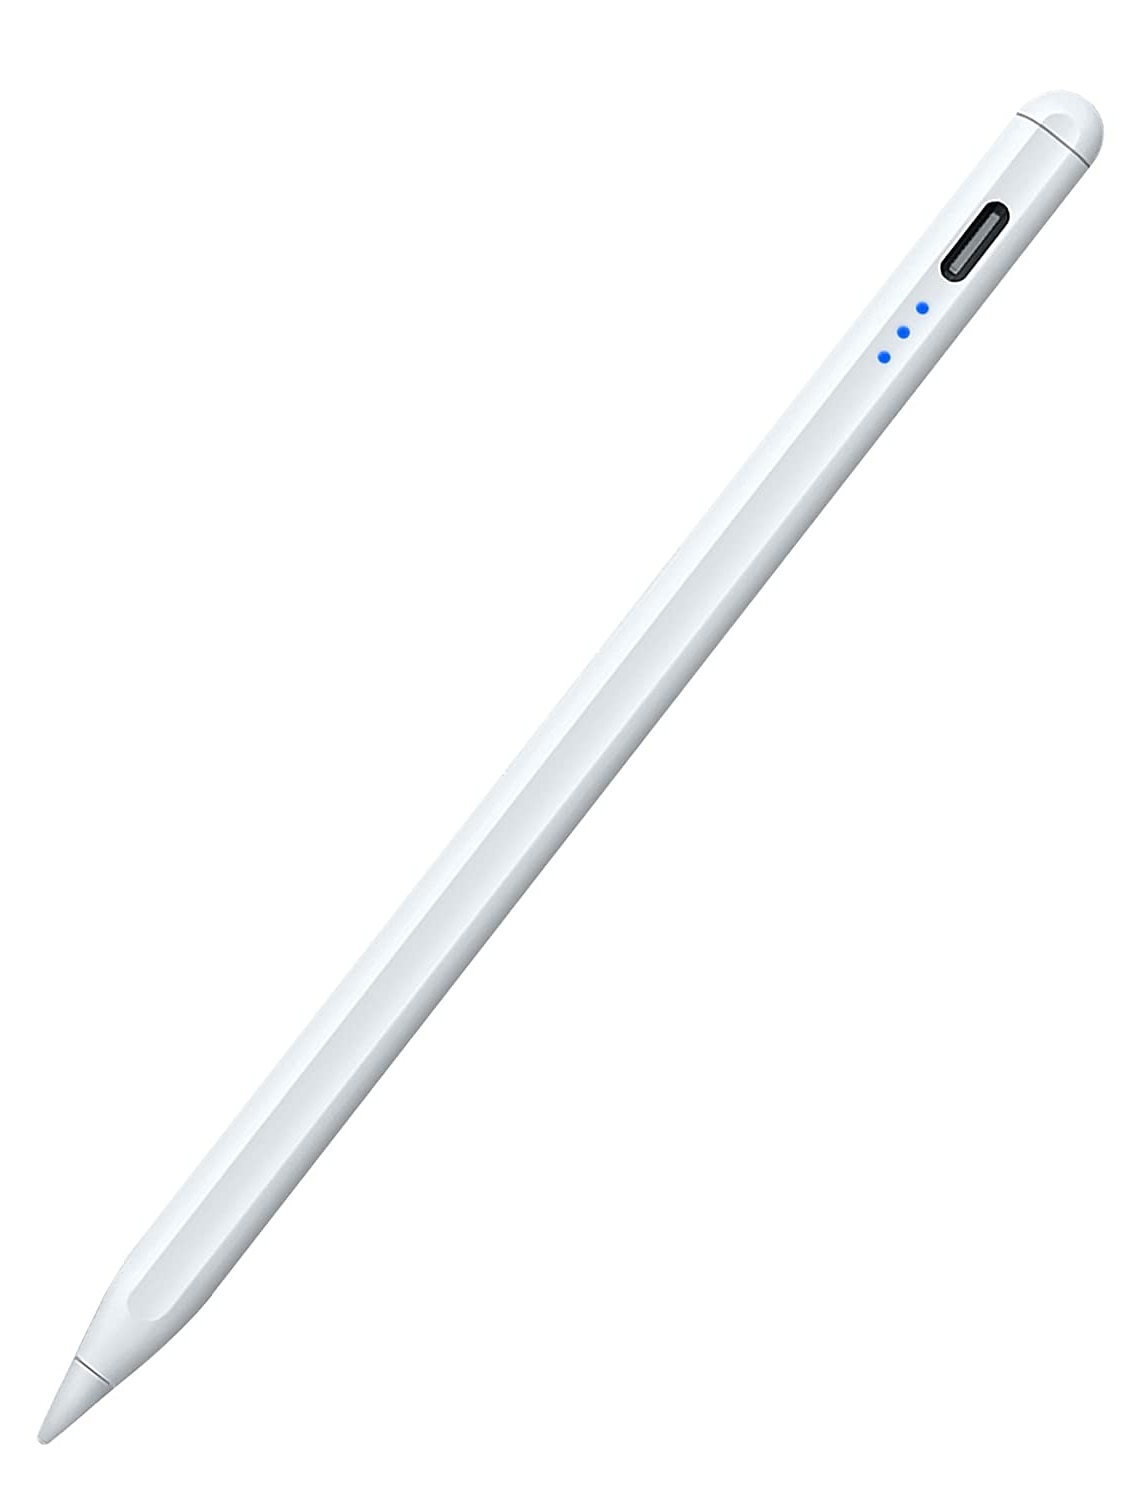 iPad Air 4th Generation Pencil 10.9 Stylus,Palm Rejction Replaceable 1.5mm Fine Point Tip Pen Compatible with Apple iPad Air 4th Generation Writing and Drawing Stylus,White 